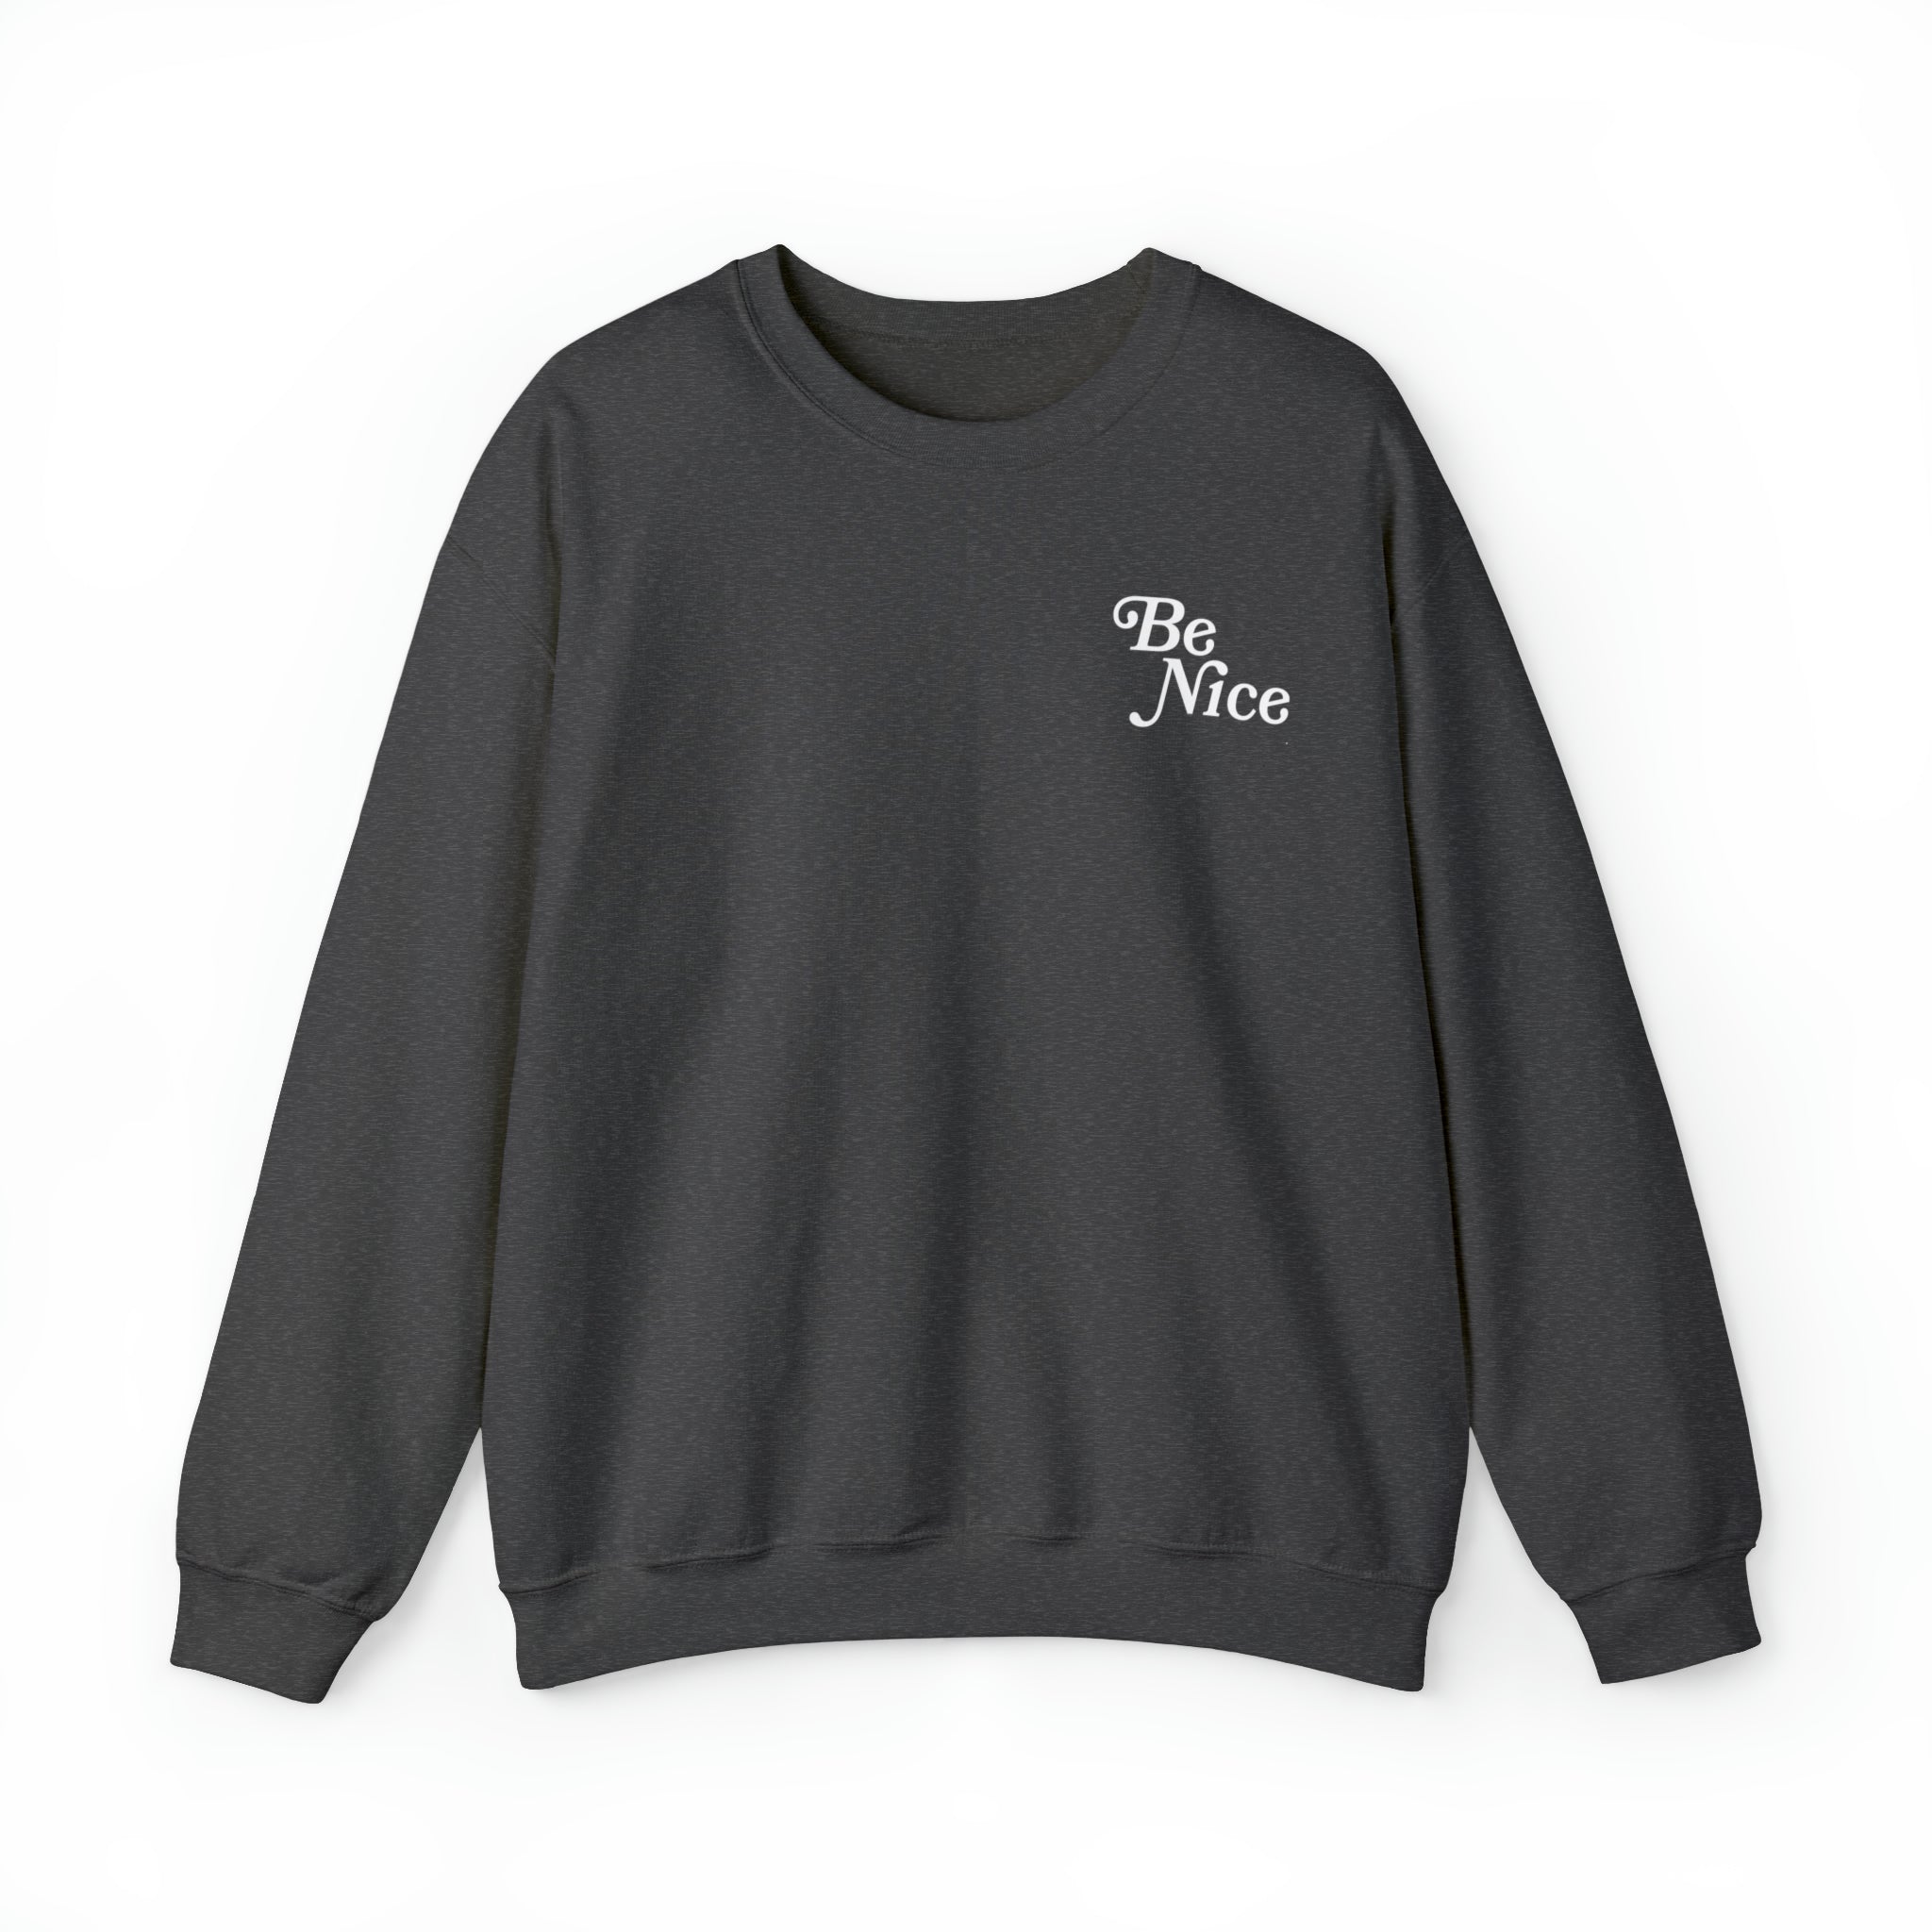 Be Nice or Kick Rocks slogan on black dark-colored crewneck sweatshirt"